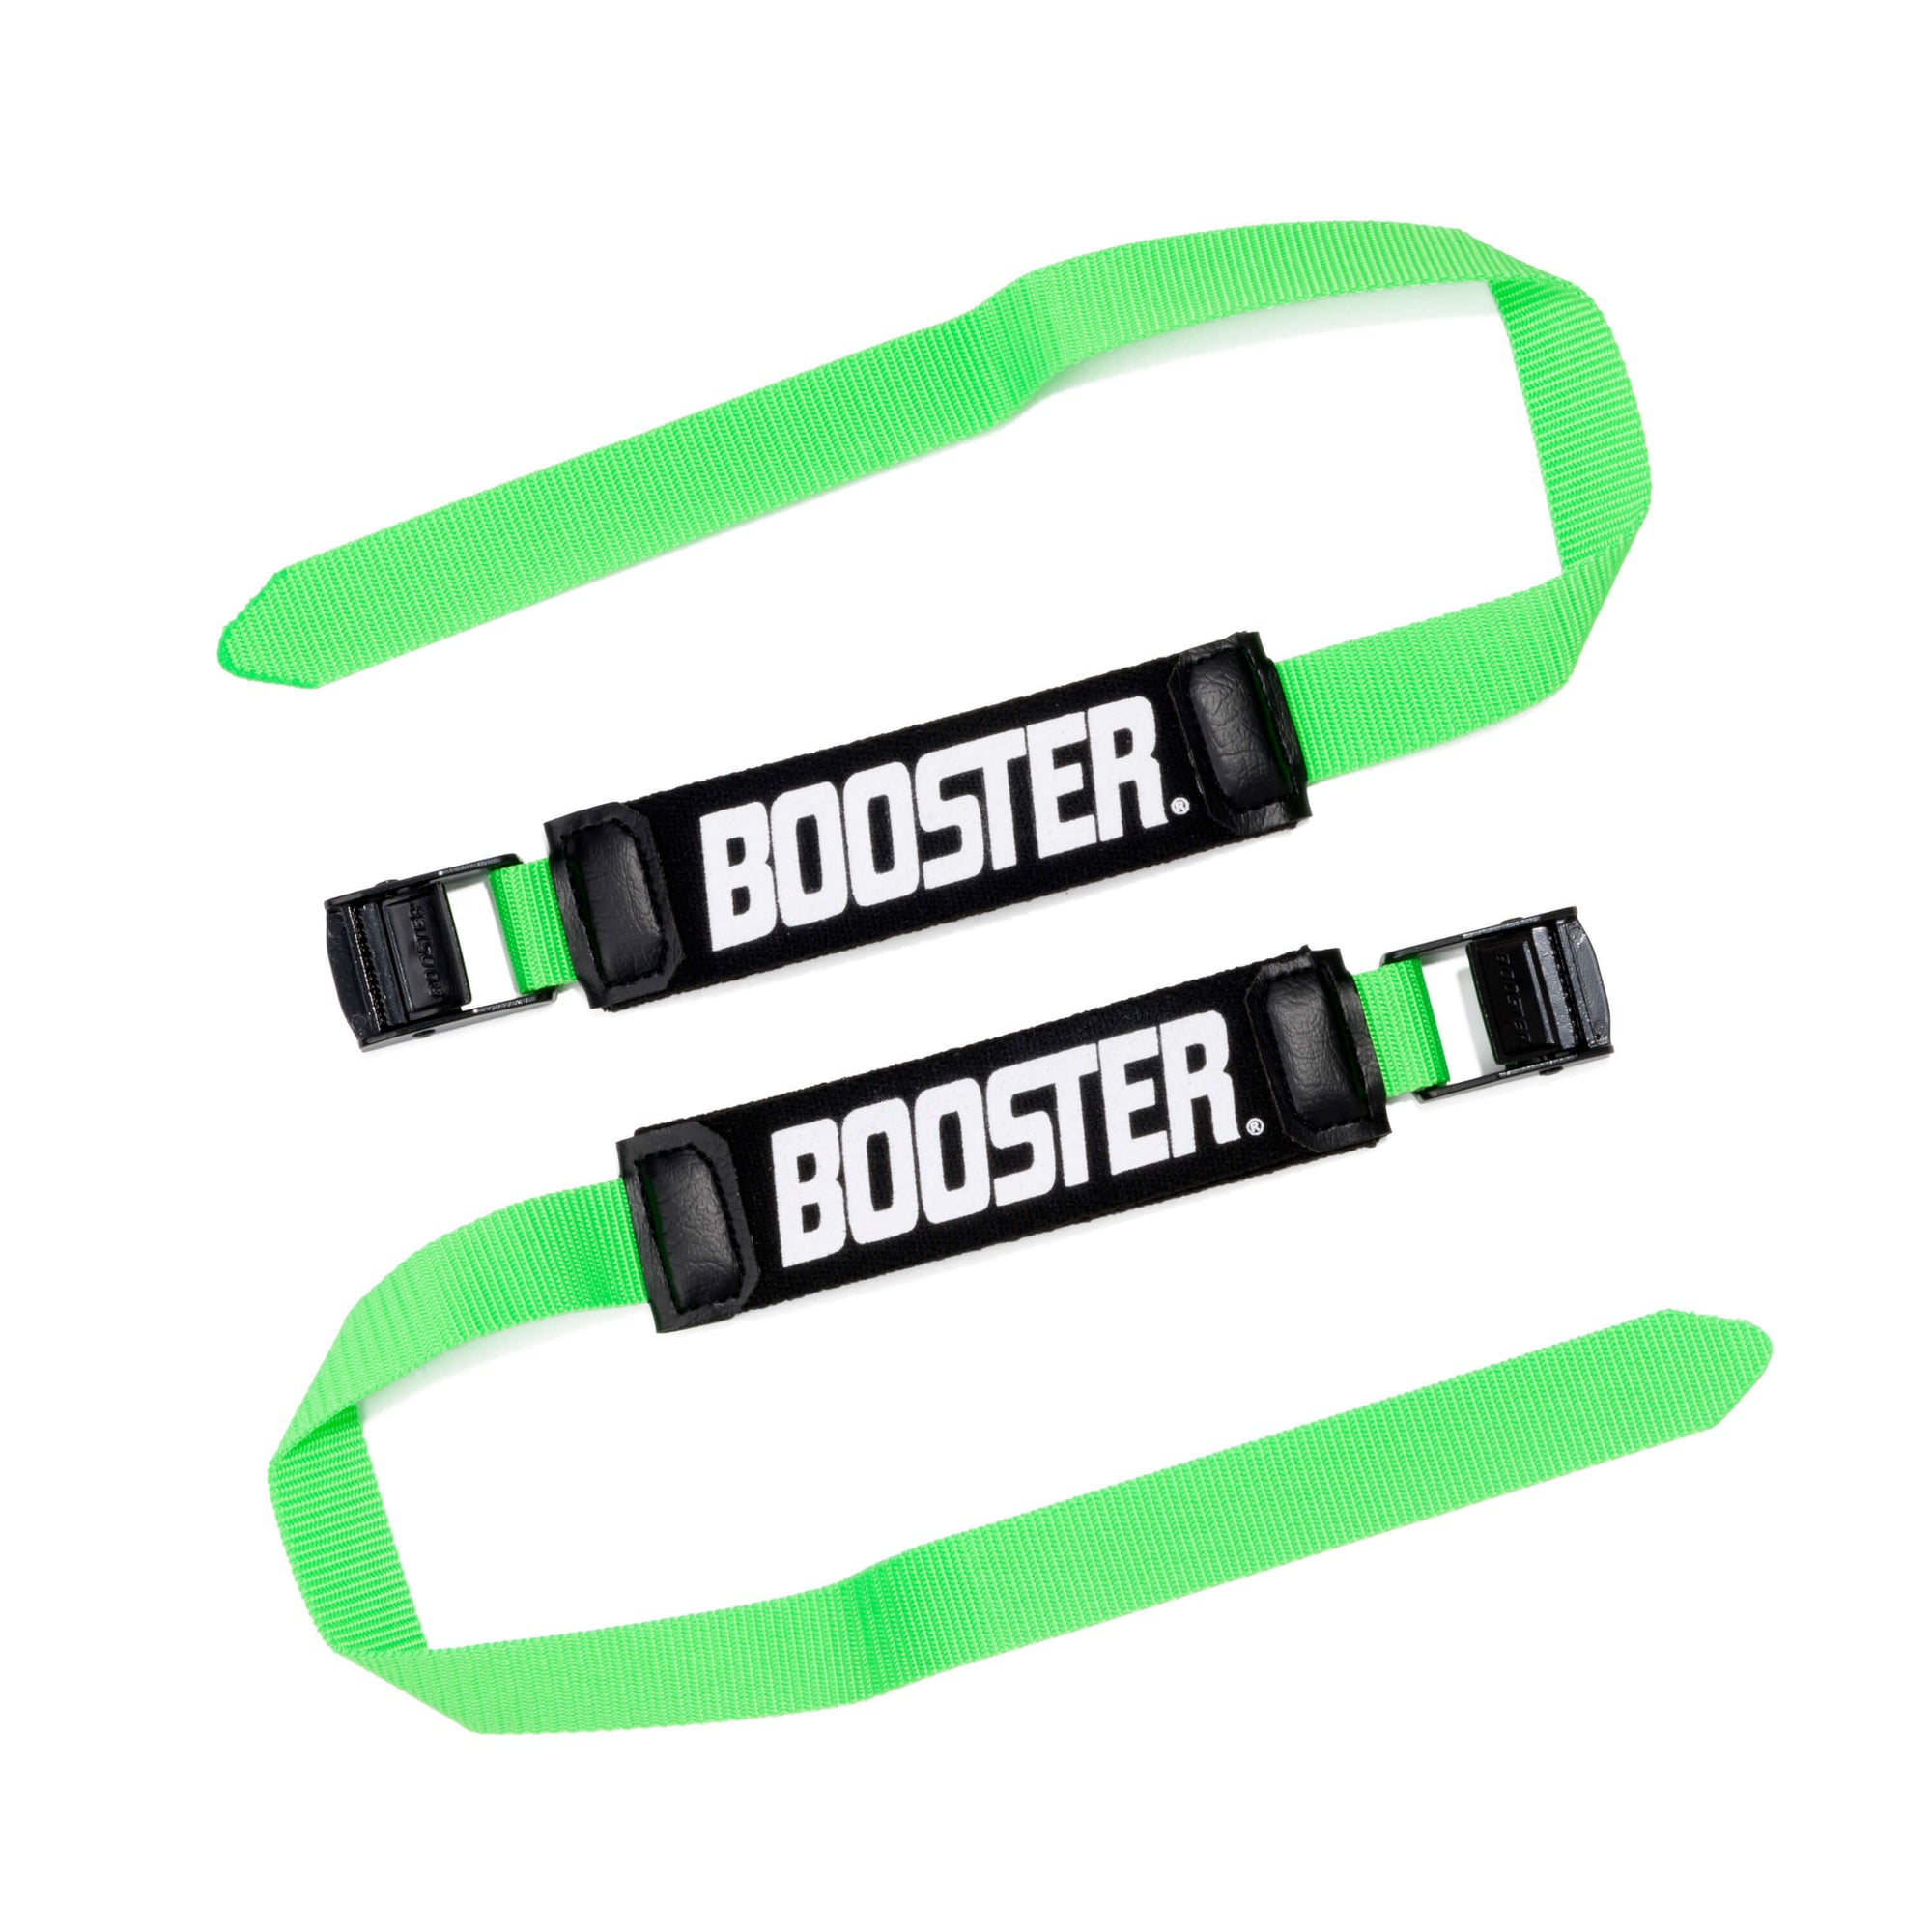 Booster Ski Strap Medium - Booster|BOOSTERMED